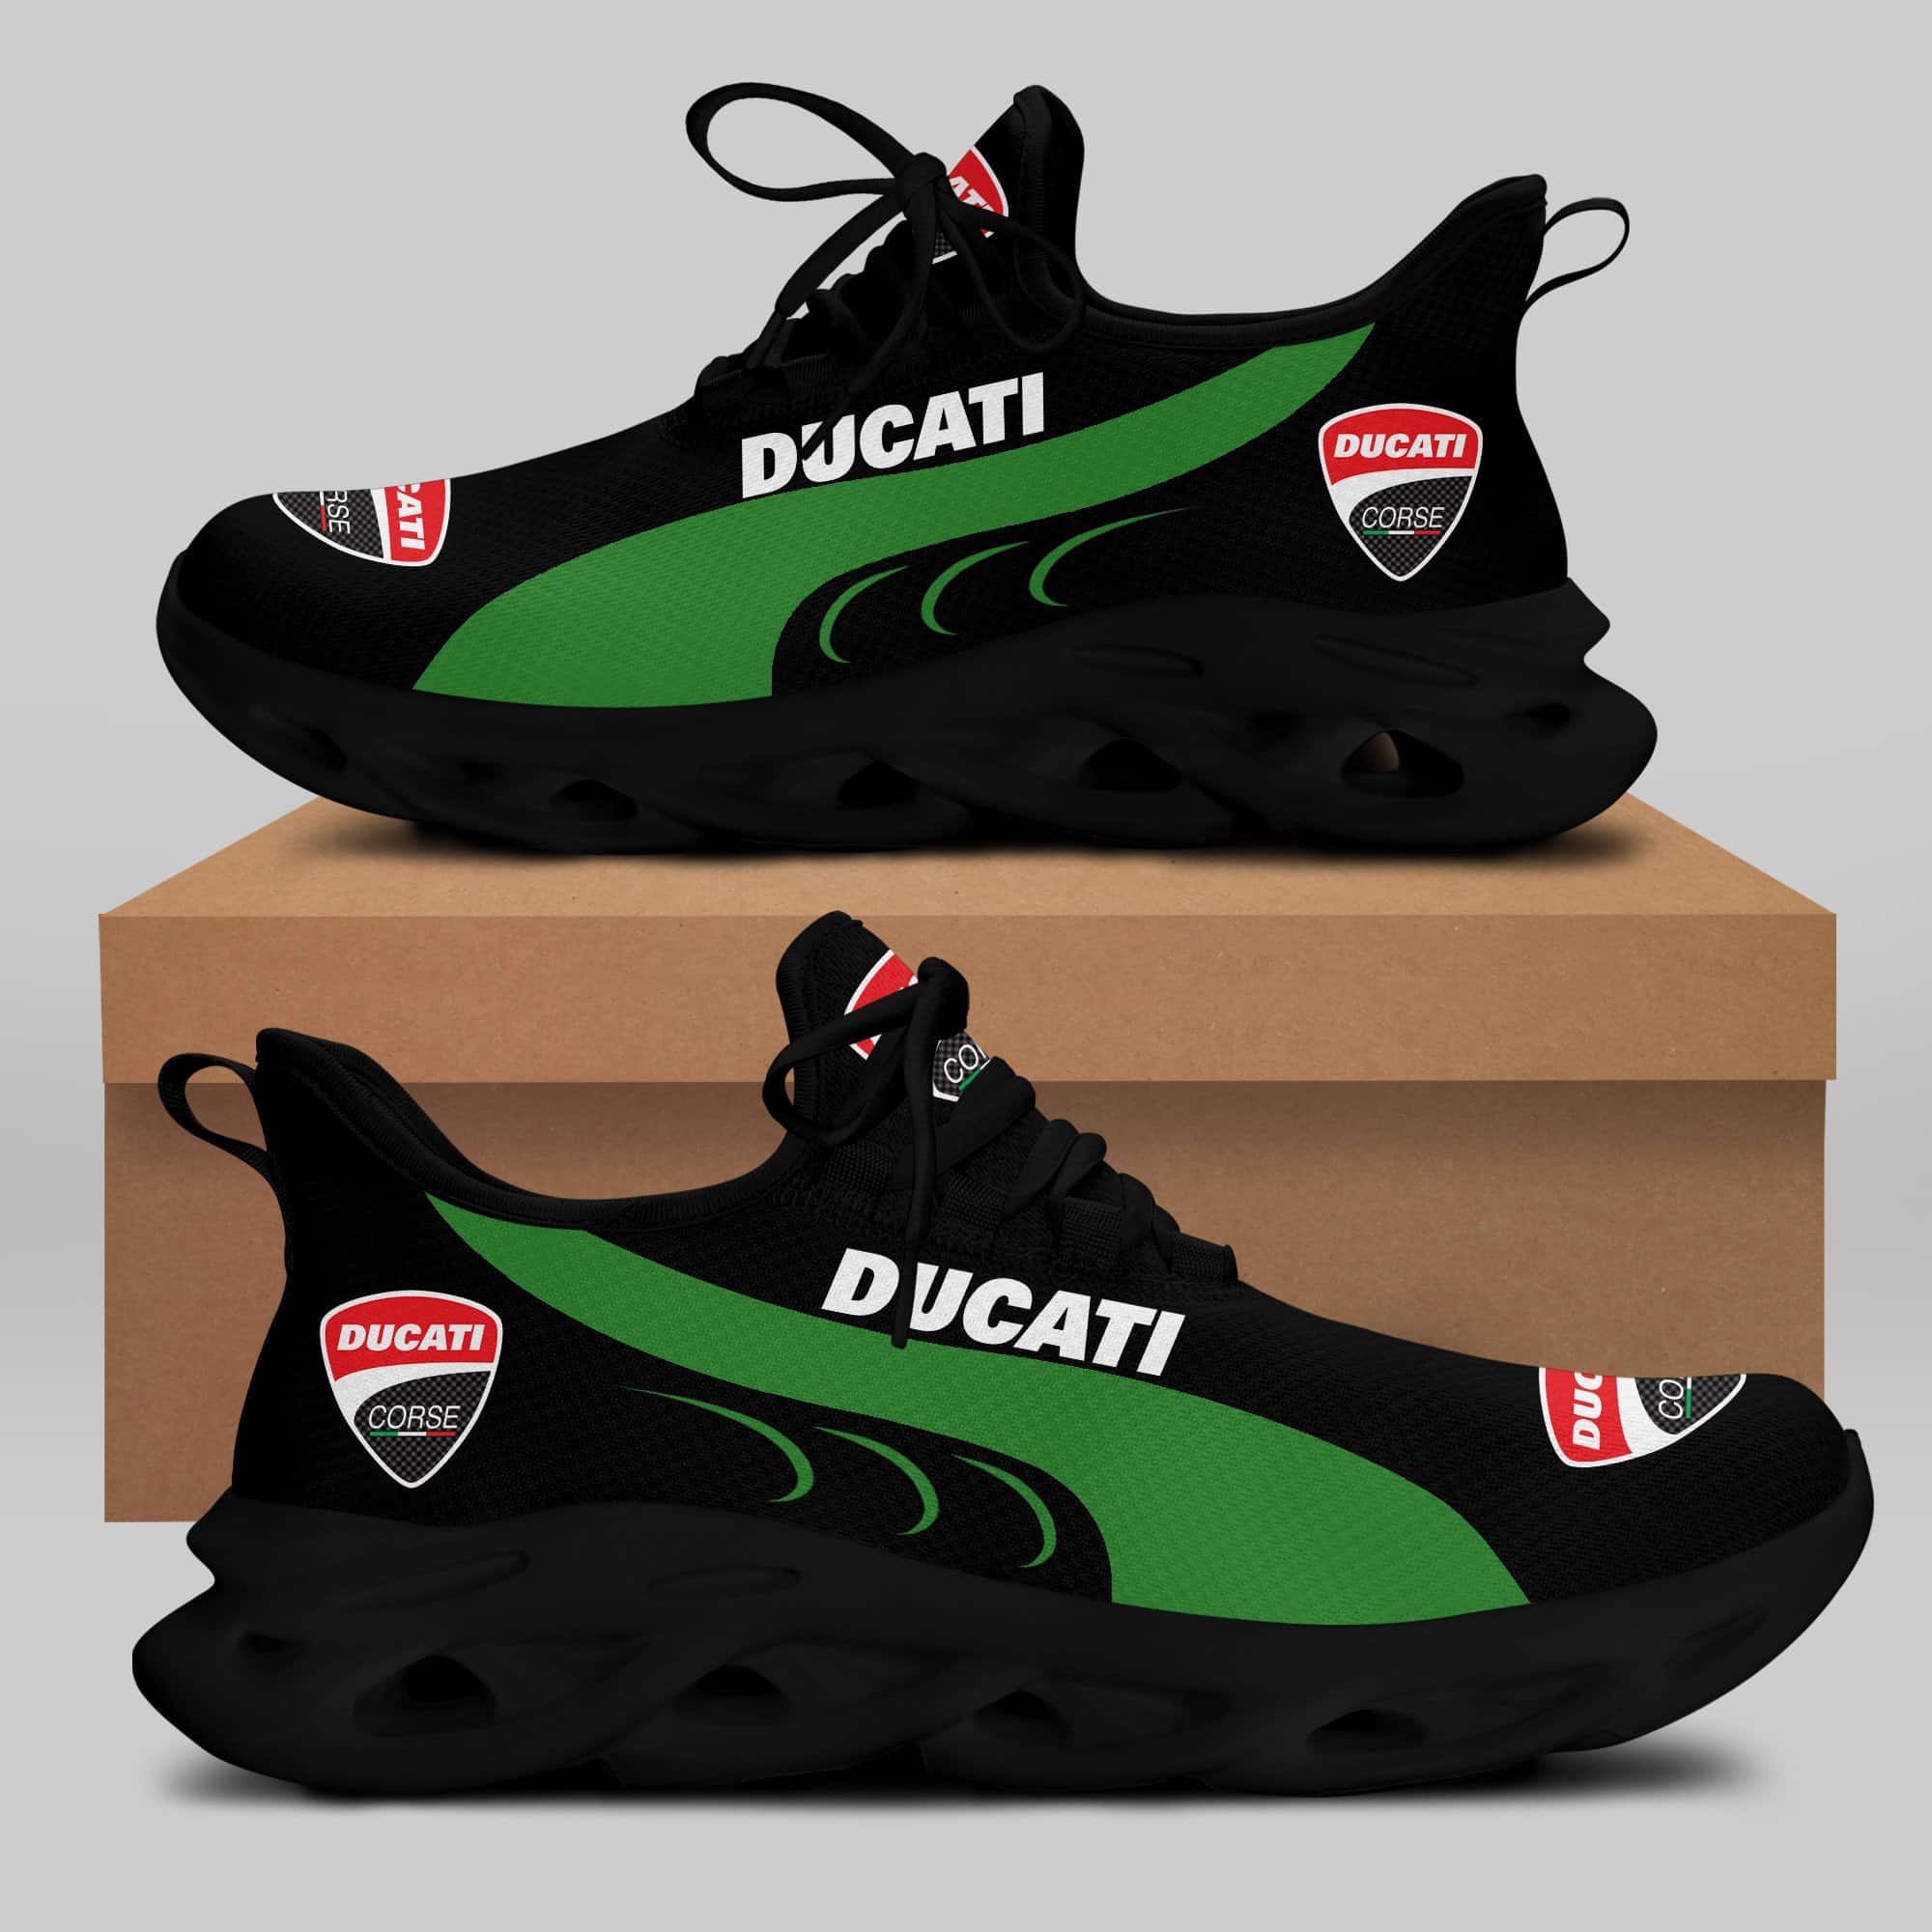 Ducati Racing Running Shoes Max Soul Shoes Sneakers Ver 62 1